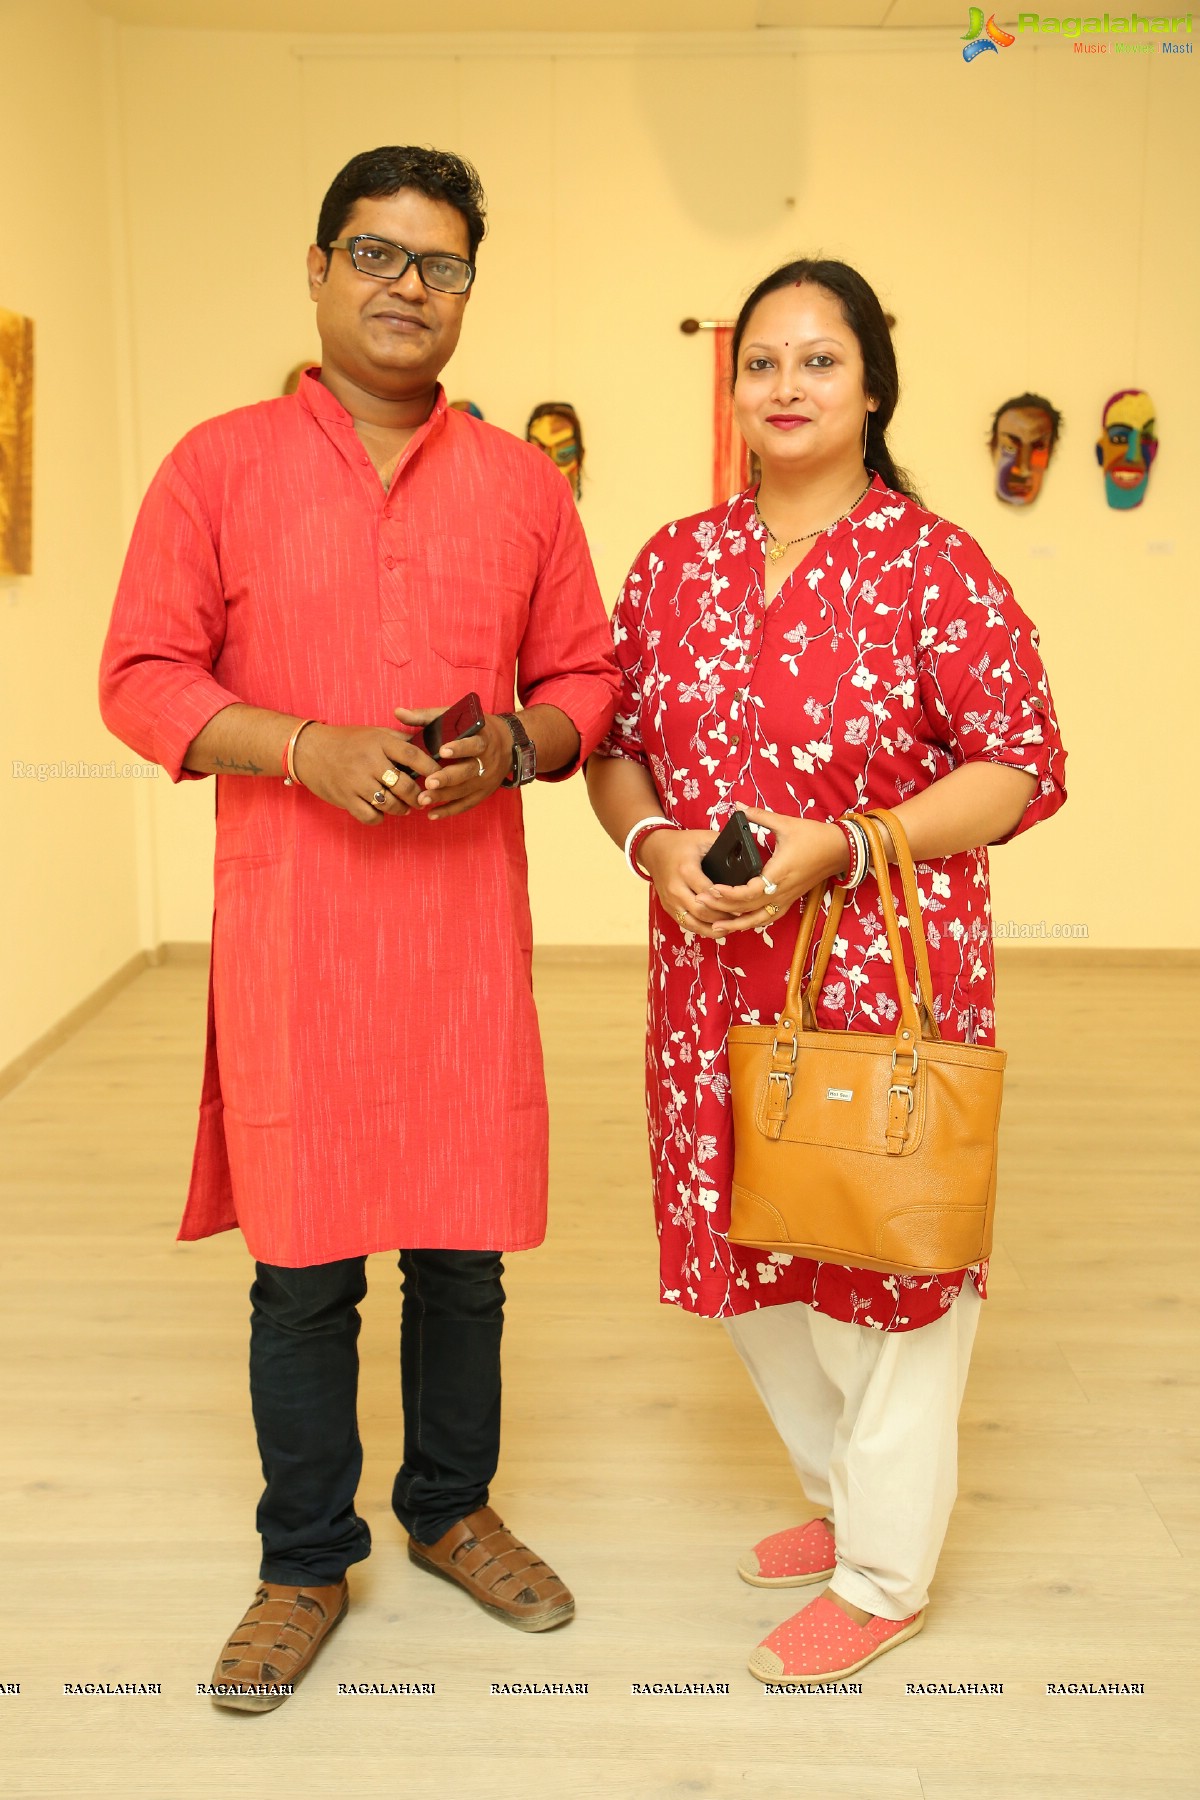 Kalakriti Art Gallery Presents Visual Allegories 